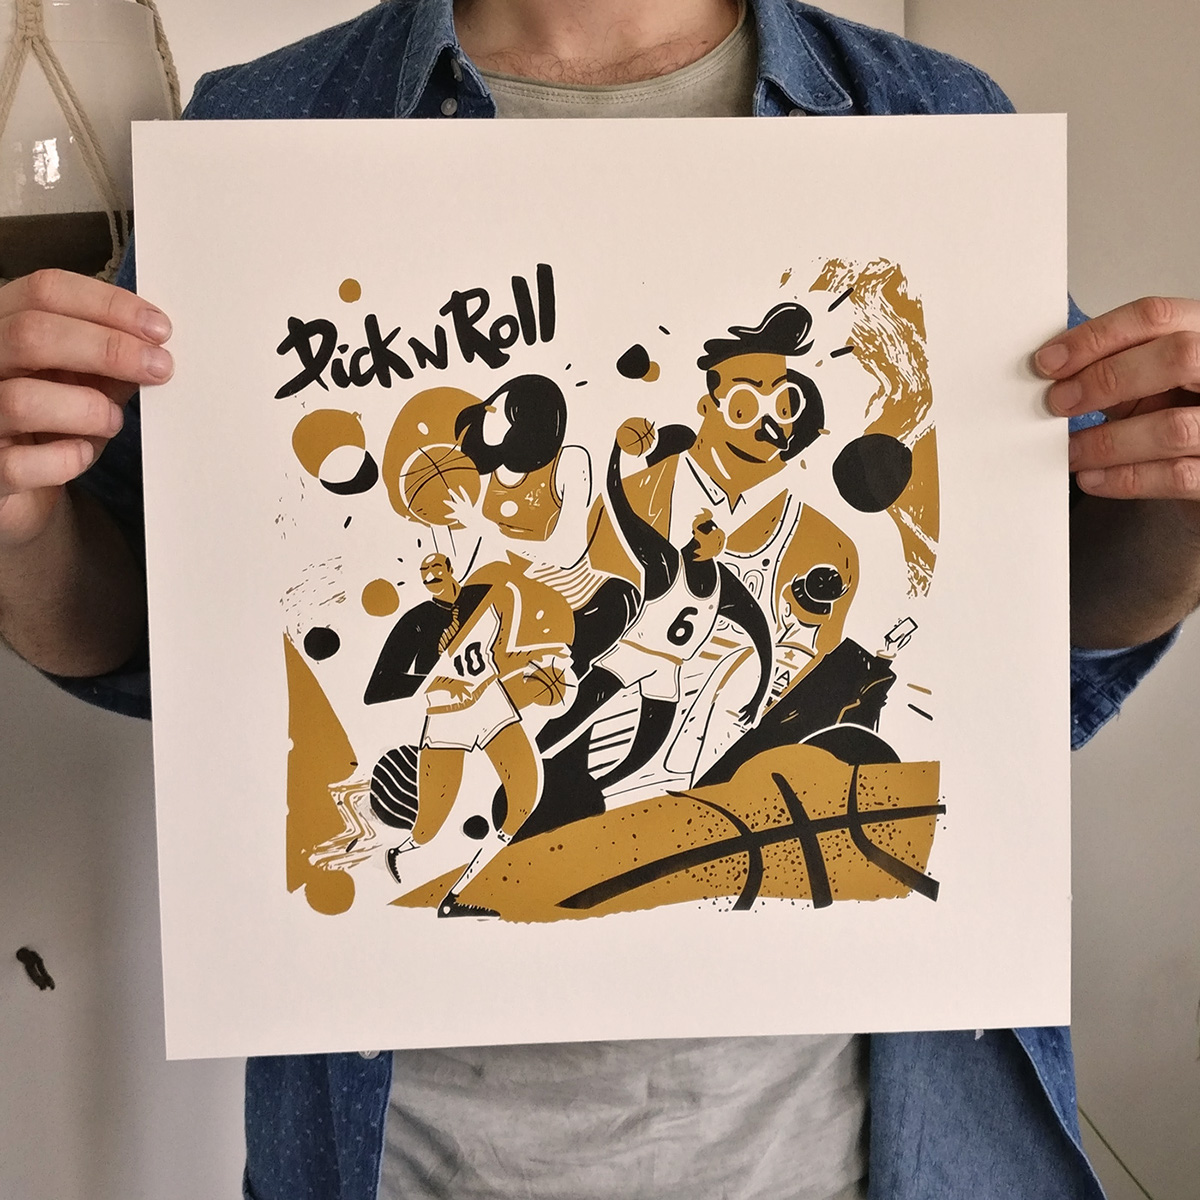 Serigraphy print screenpirnt poster basketball Boxe backfist picknroll